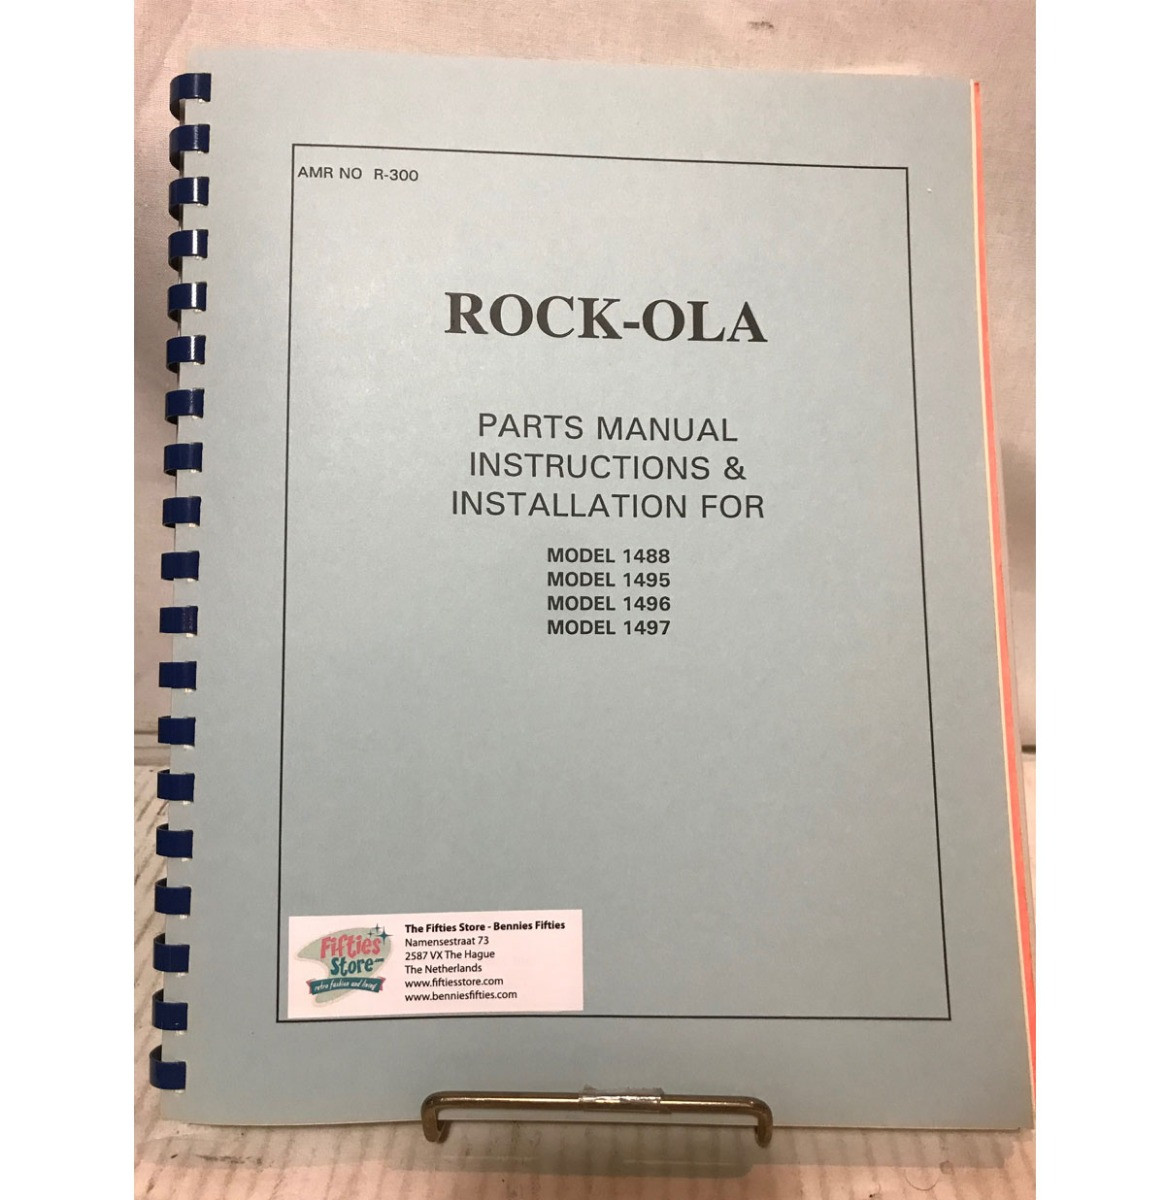 Rock-Ola 1488, 1495, 1496, 1497 Jukebox Service Manual